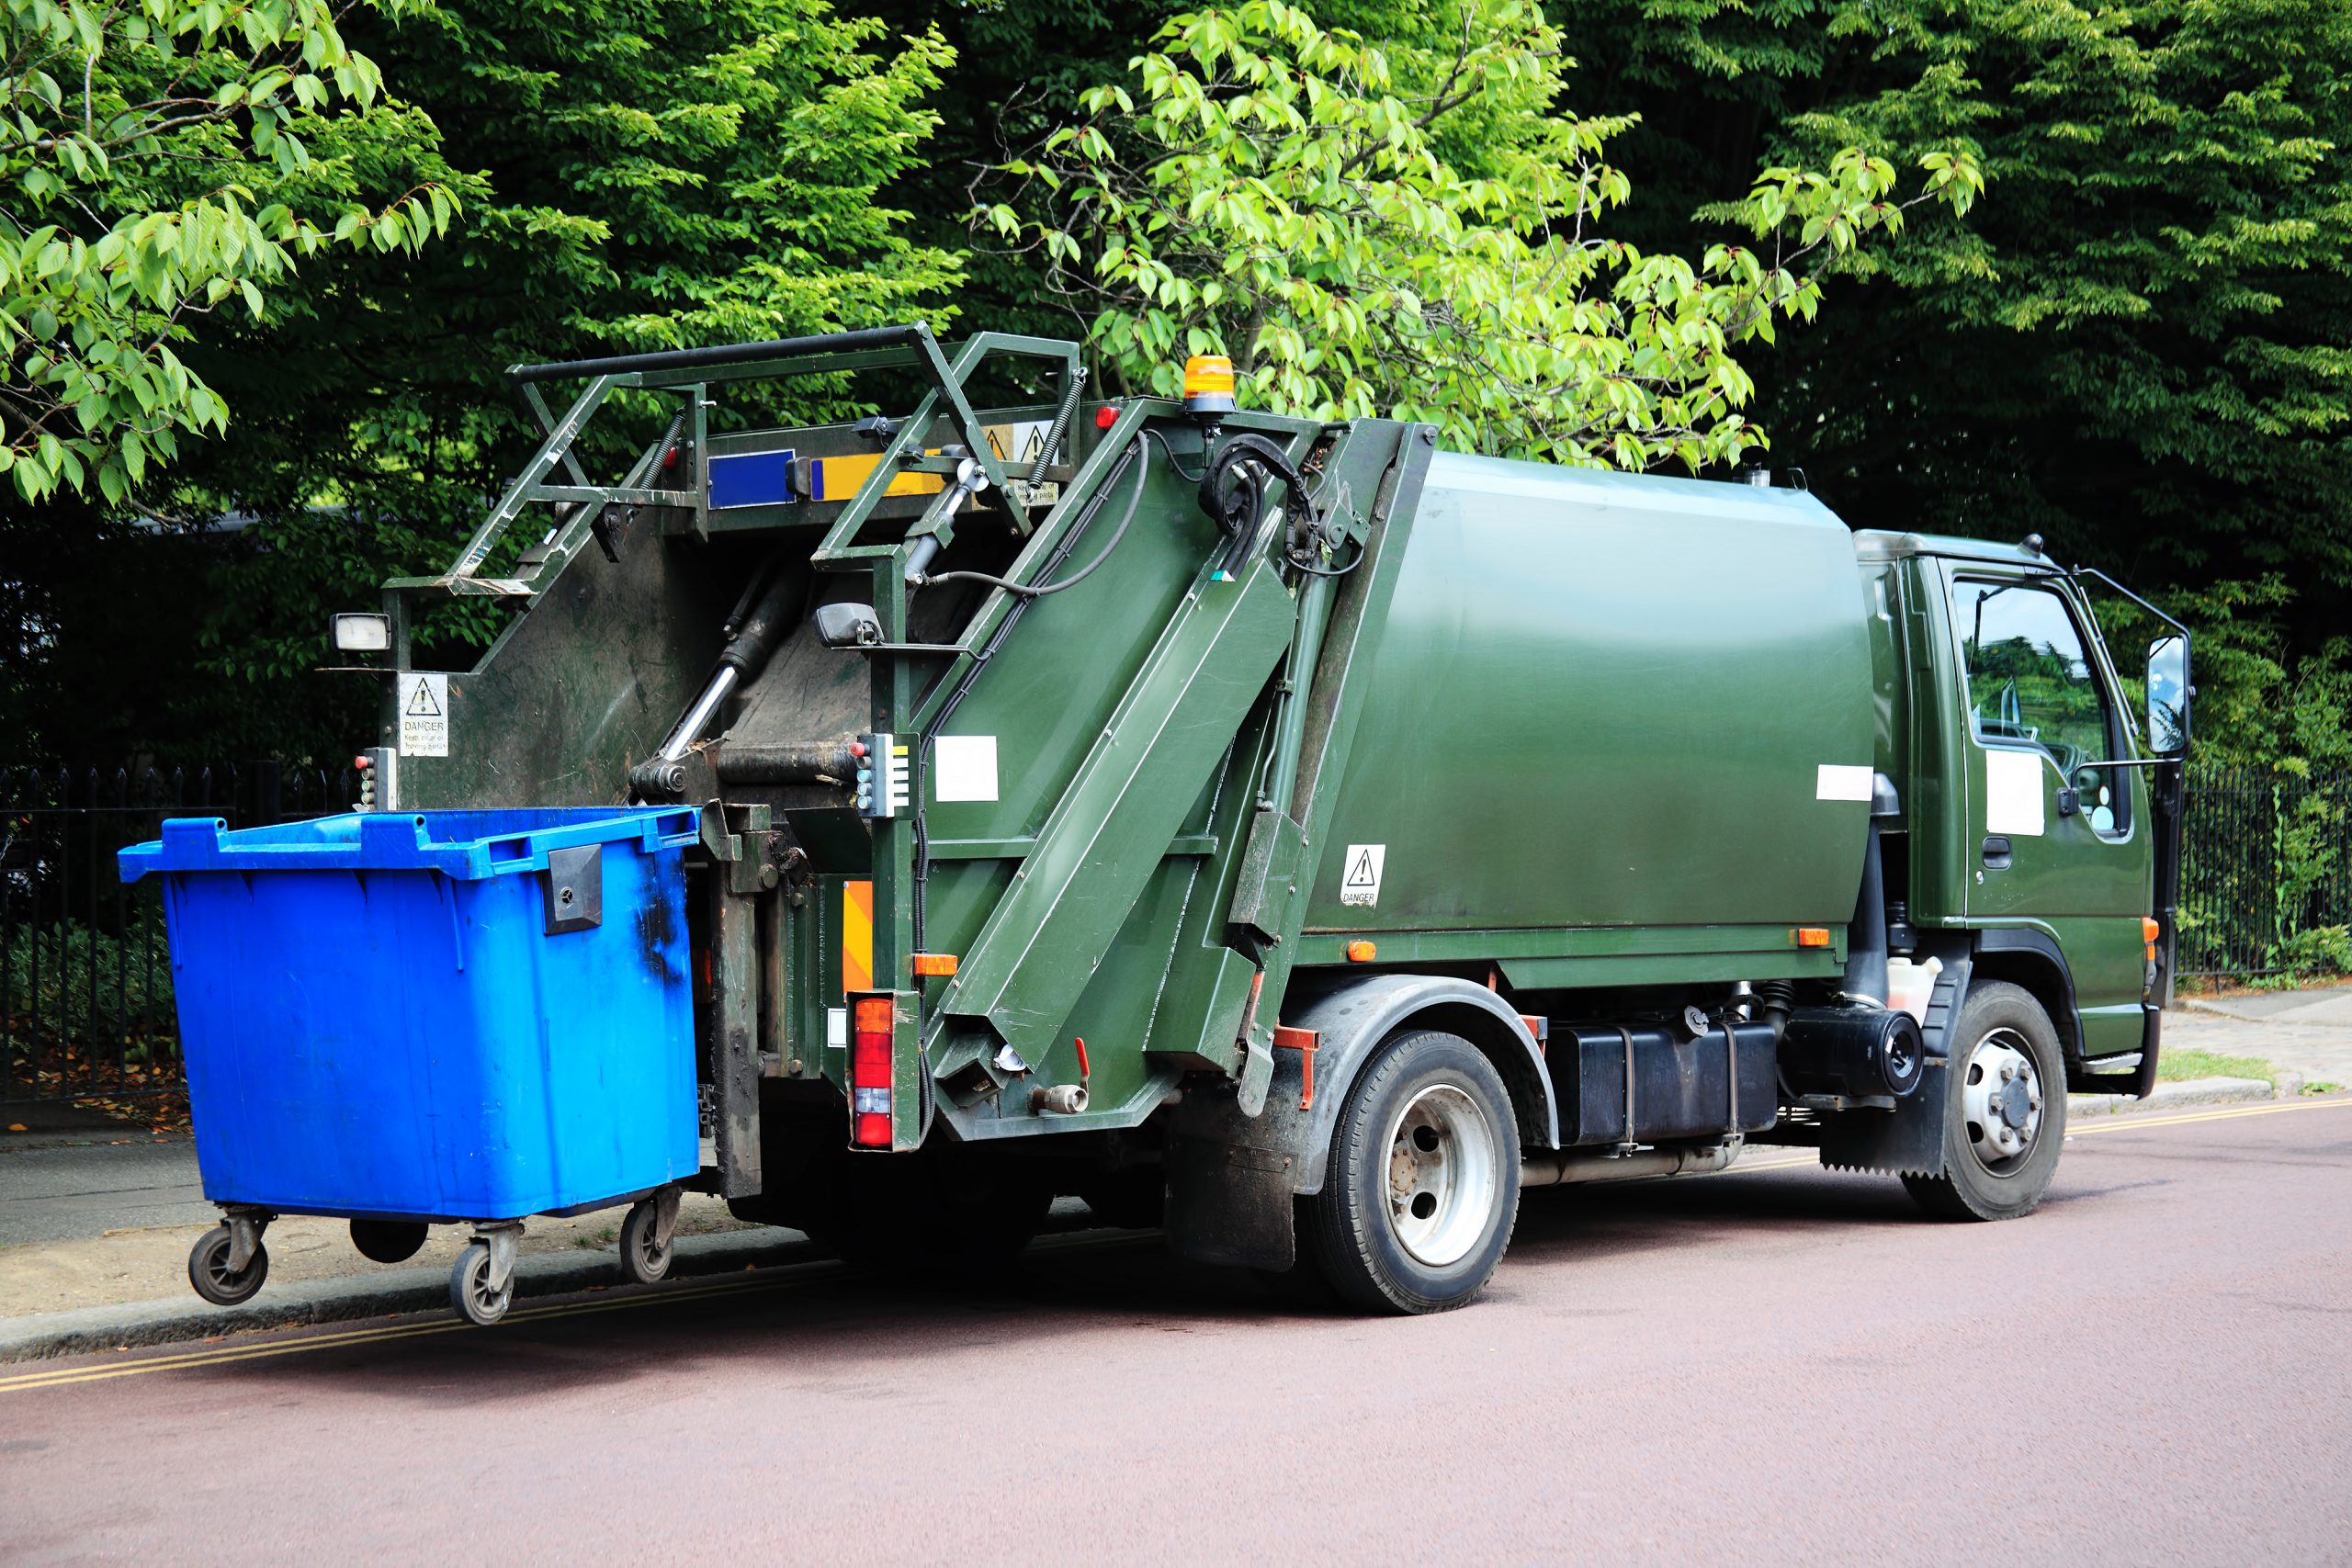 Consider Junk Removal Disposal Methods